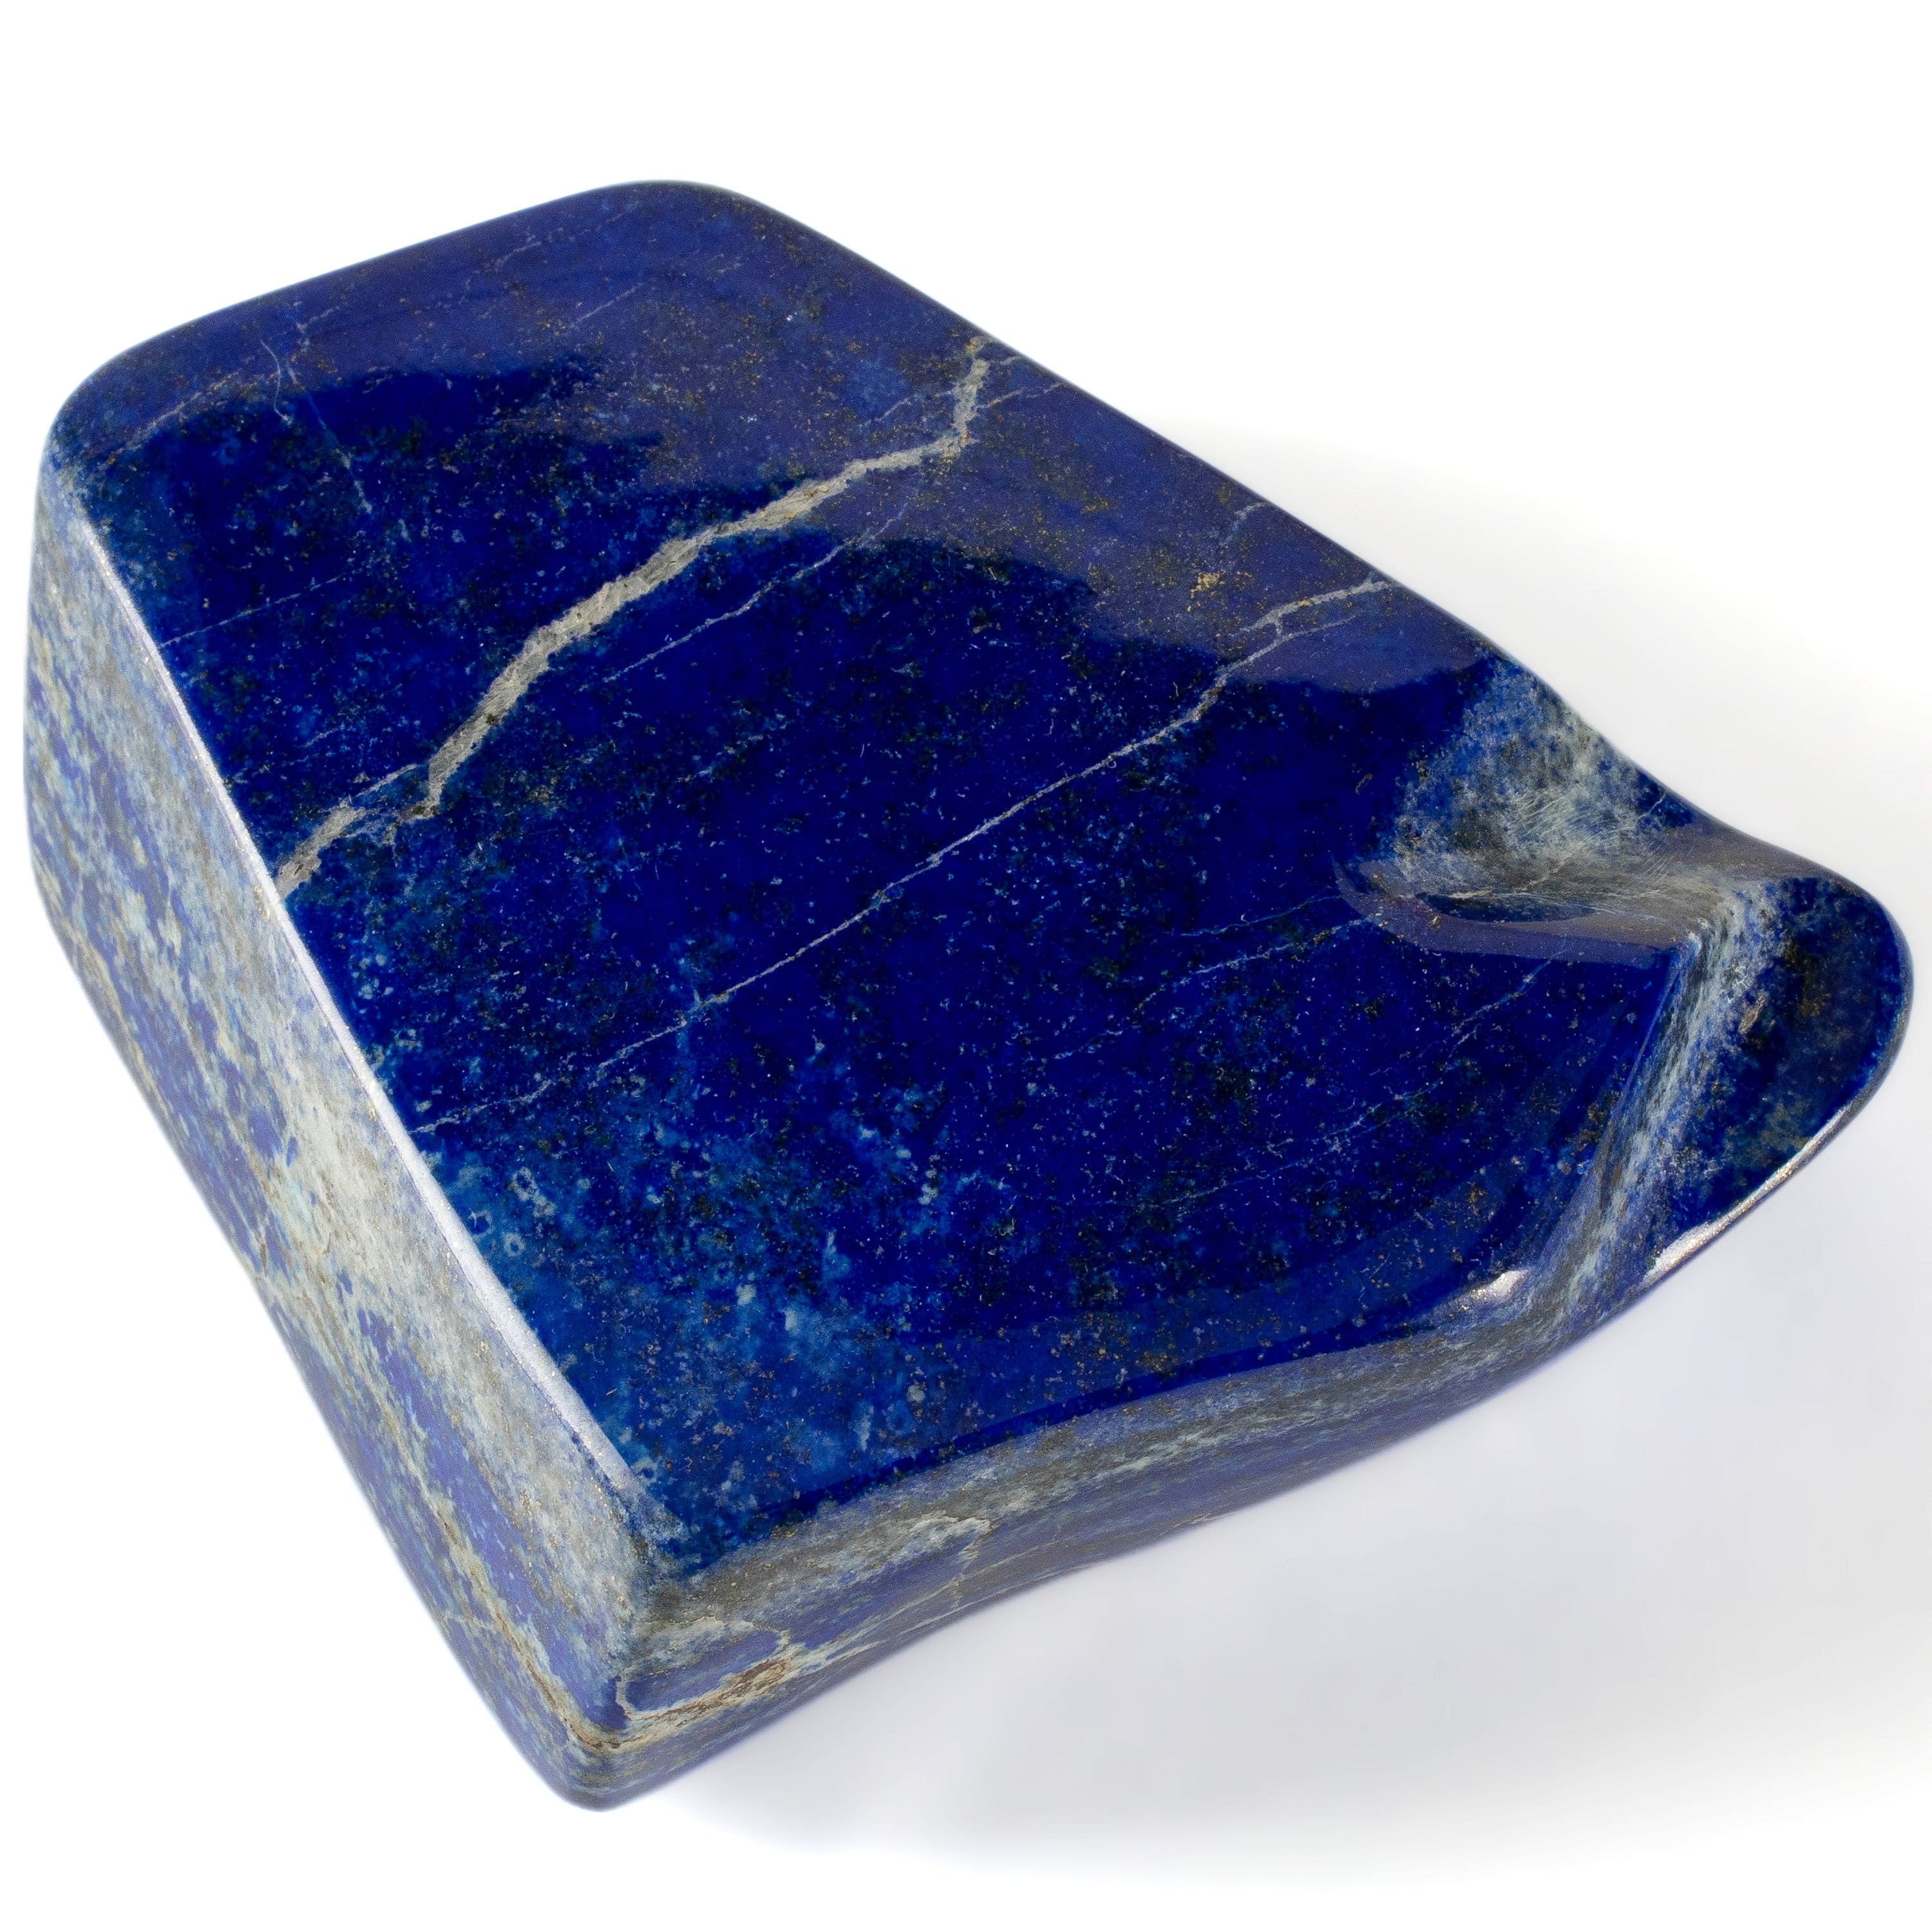 Kalifano Lapis Lapis Lazuli Freeform from Afghanistan - 5" / 1,350 grams LP1350.001